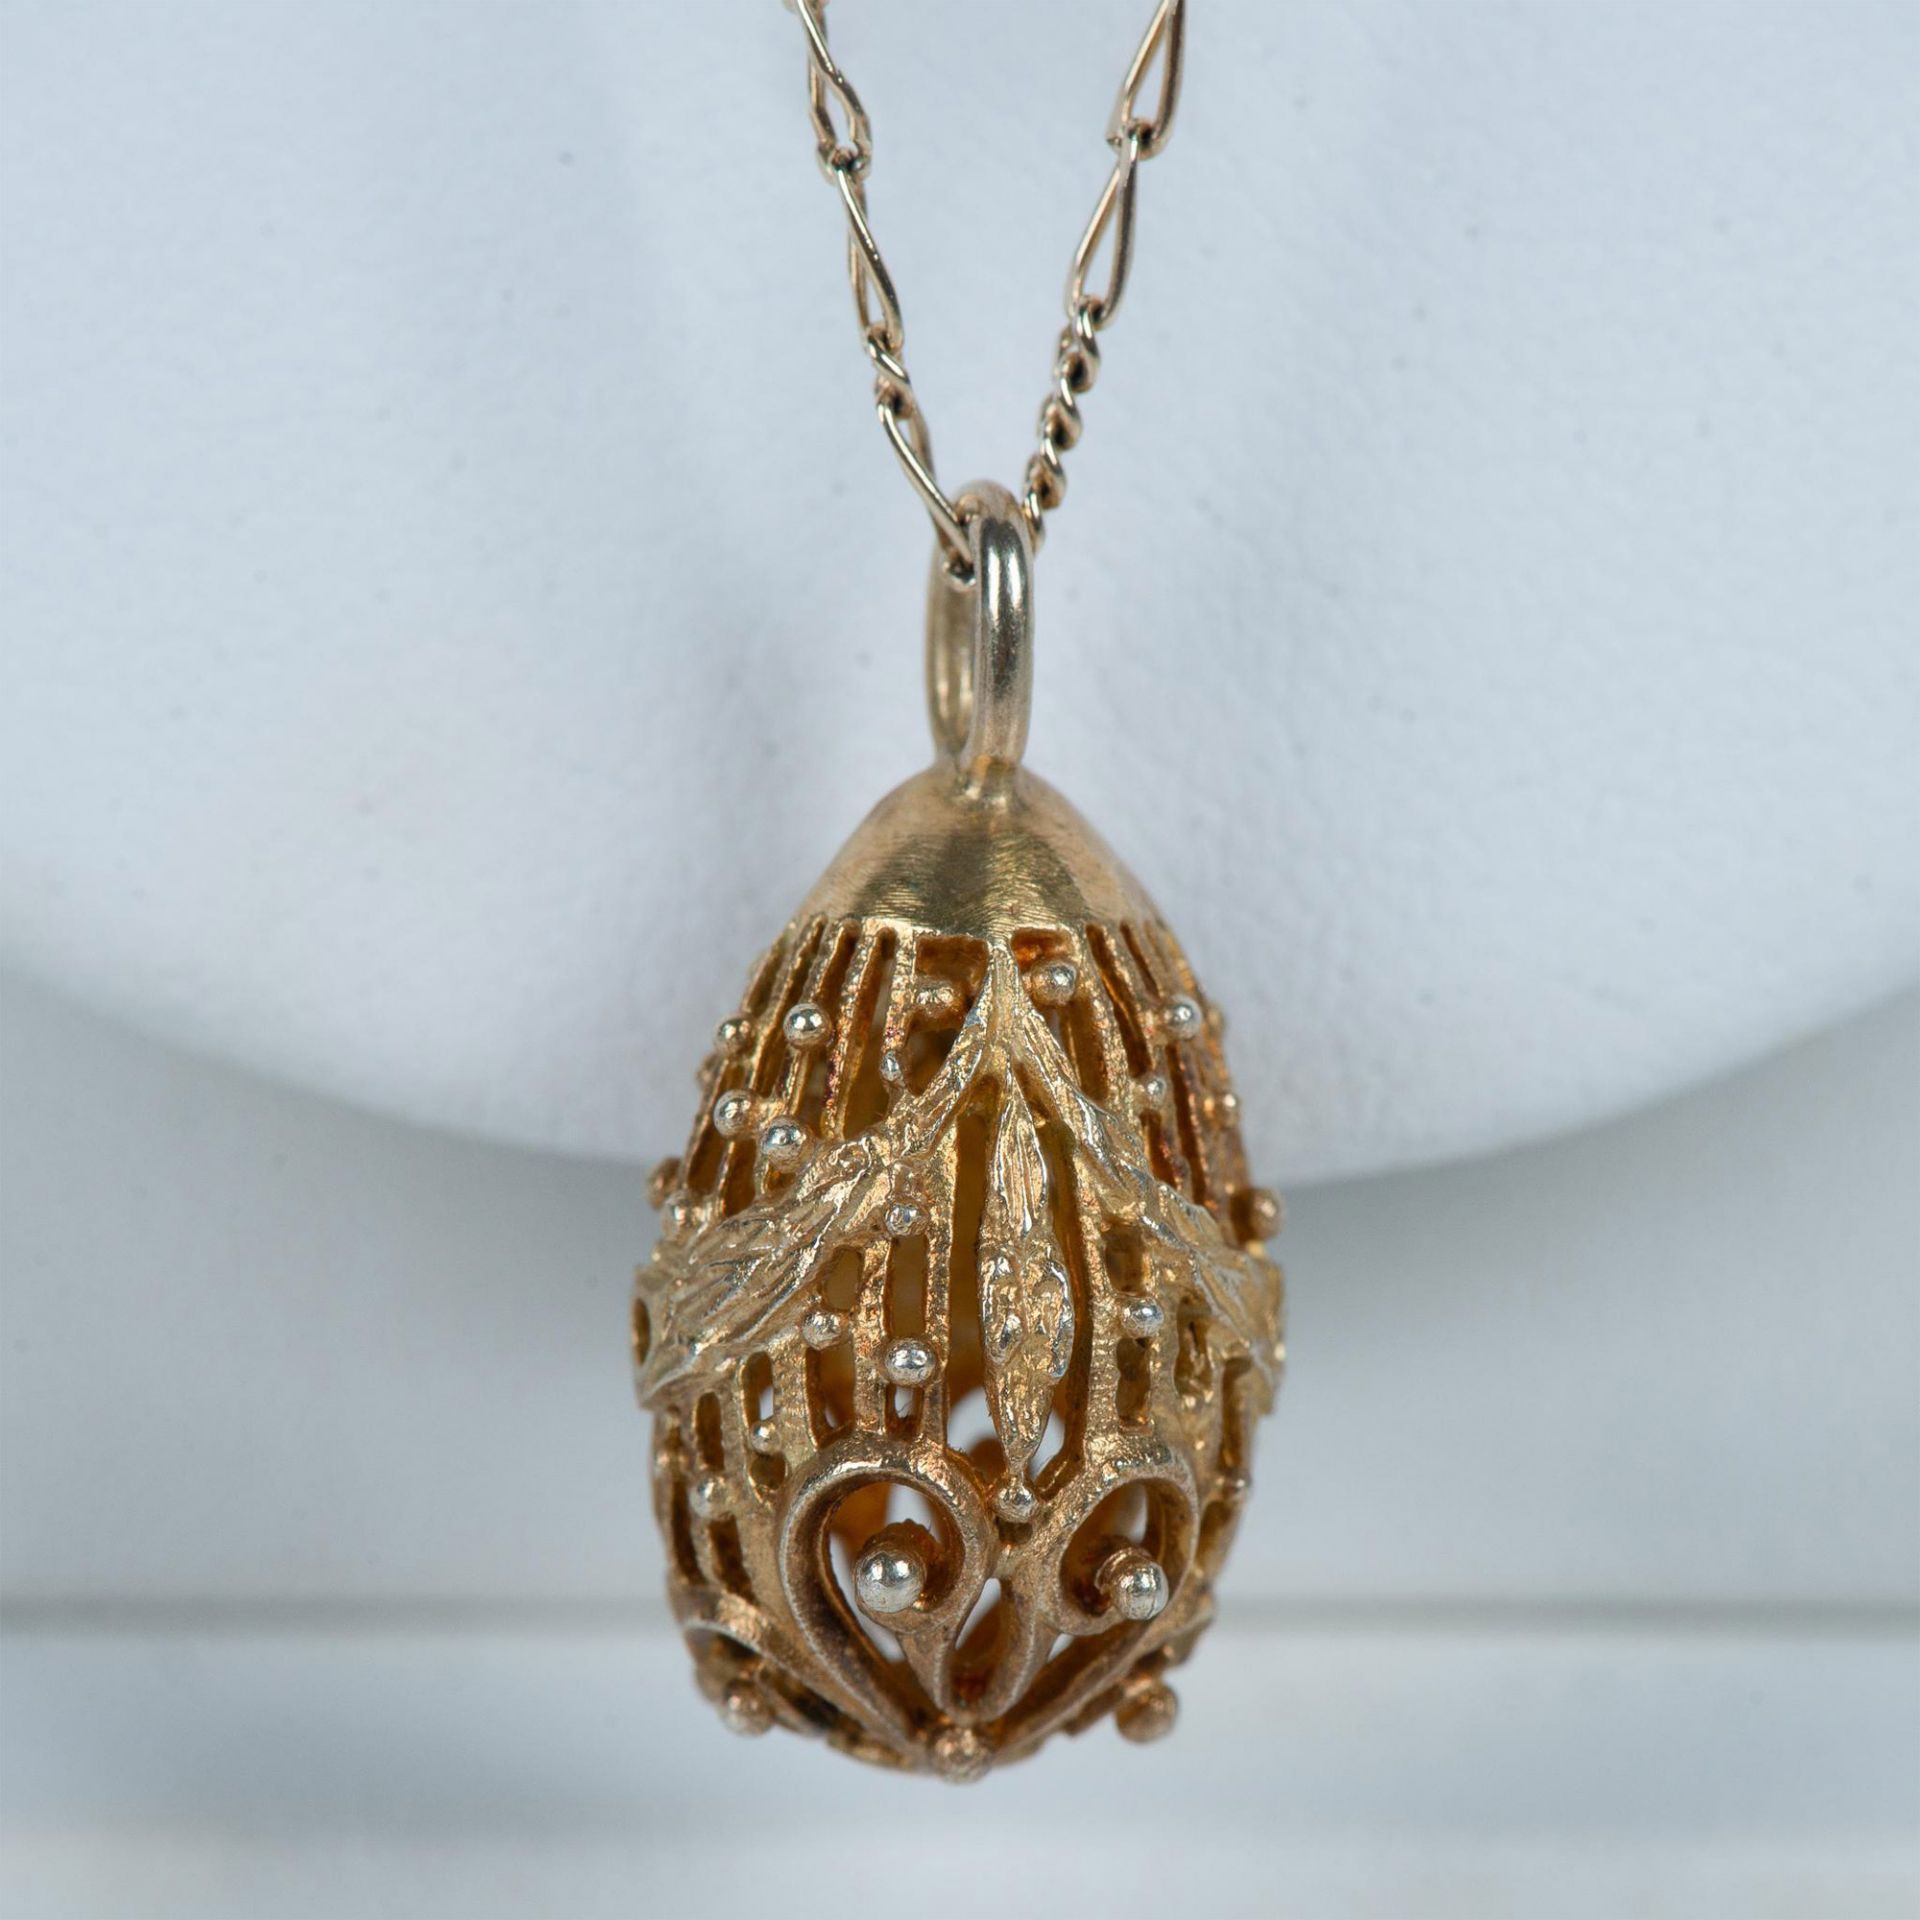 Mini Ornate Gold Metal Egg Pendant Necklace - Image 2 of 4